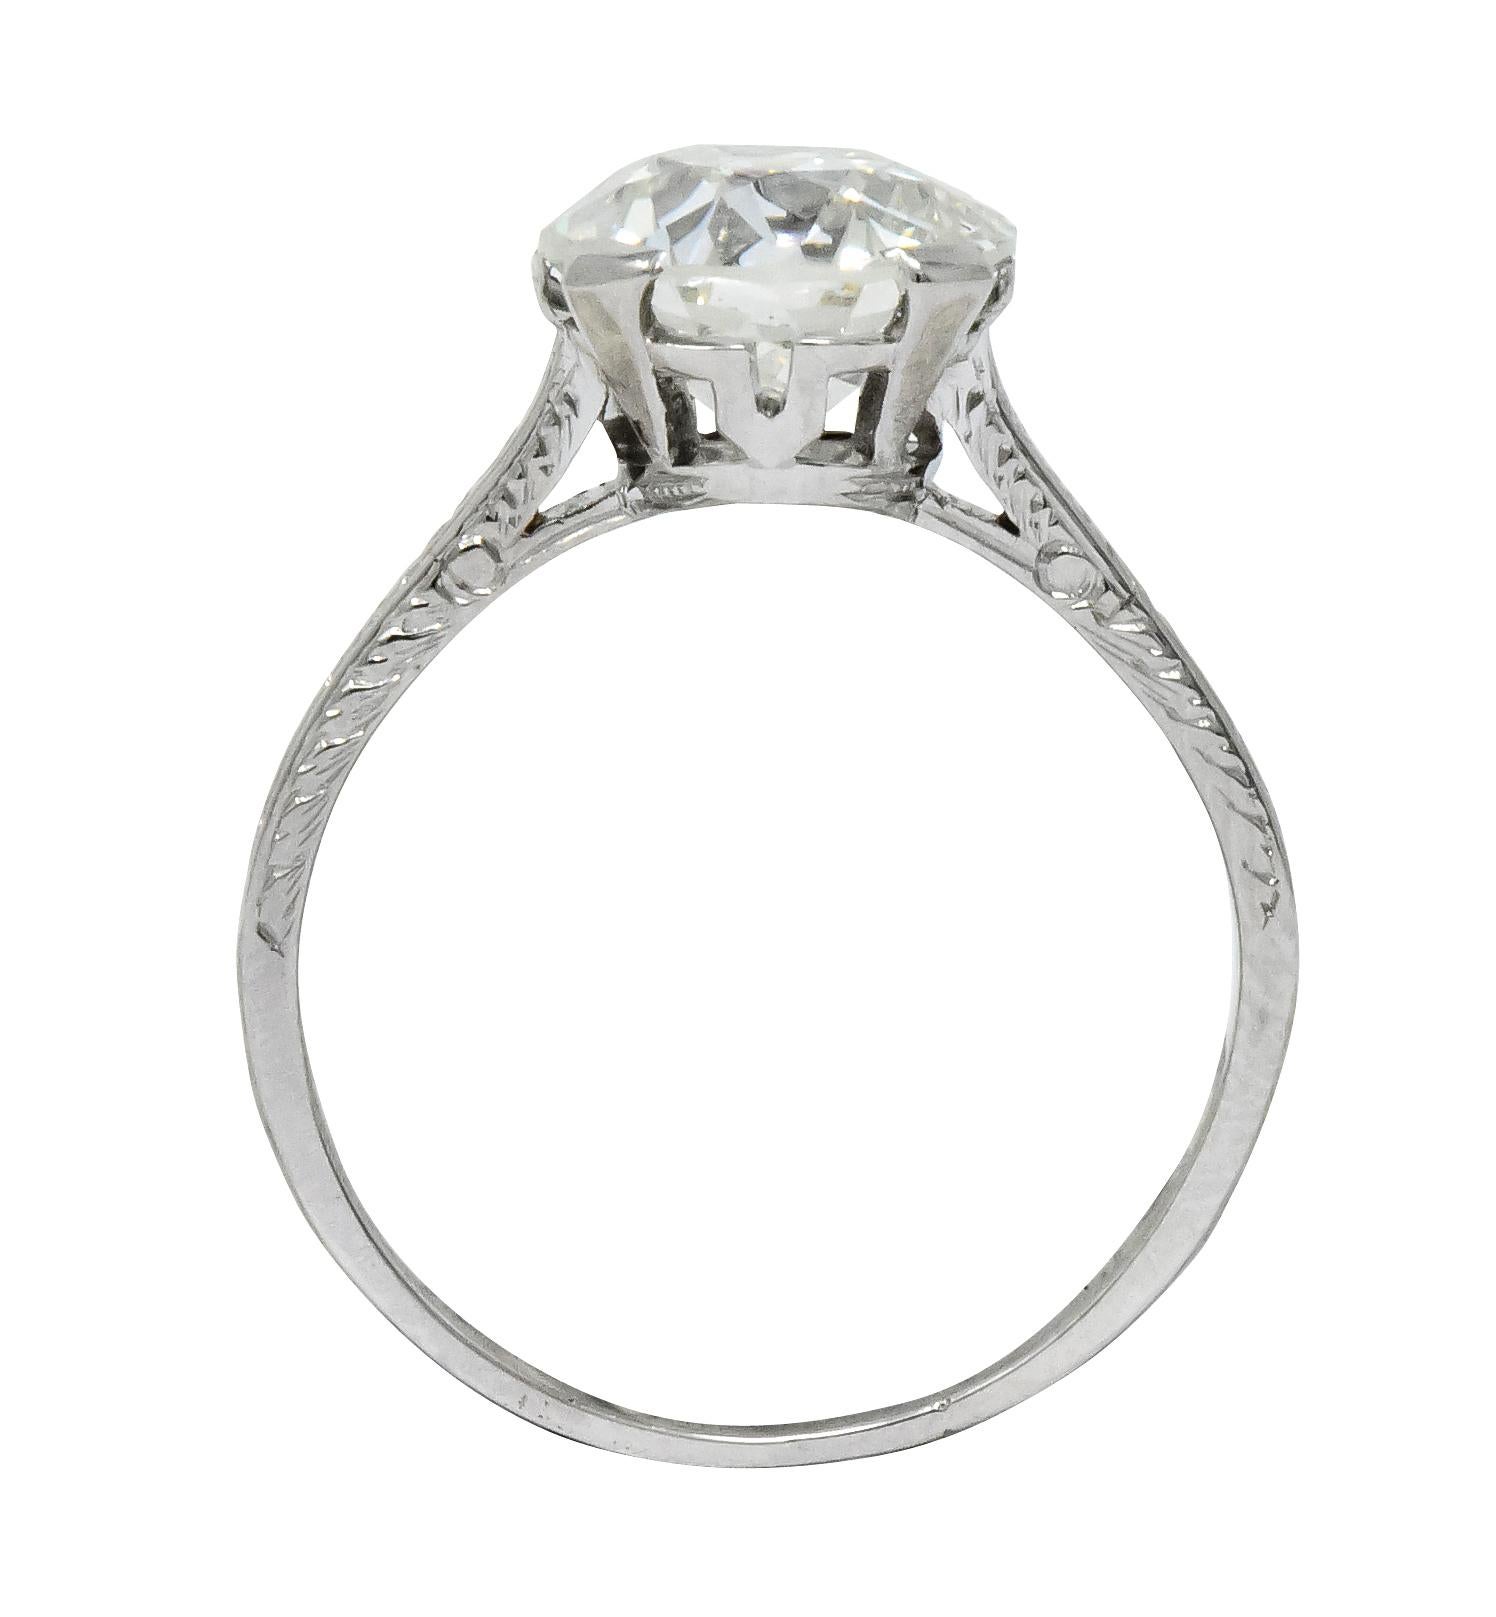 Gillot & Co. 3.21 Carat Old European Diamond Platinum Engagement Ring GIA 1